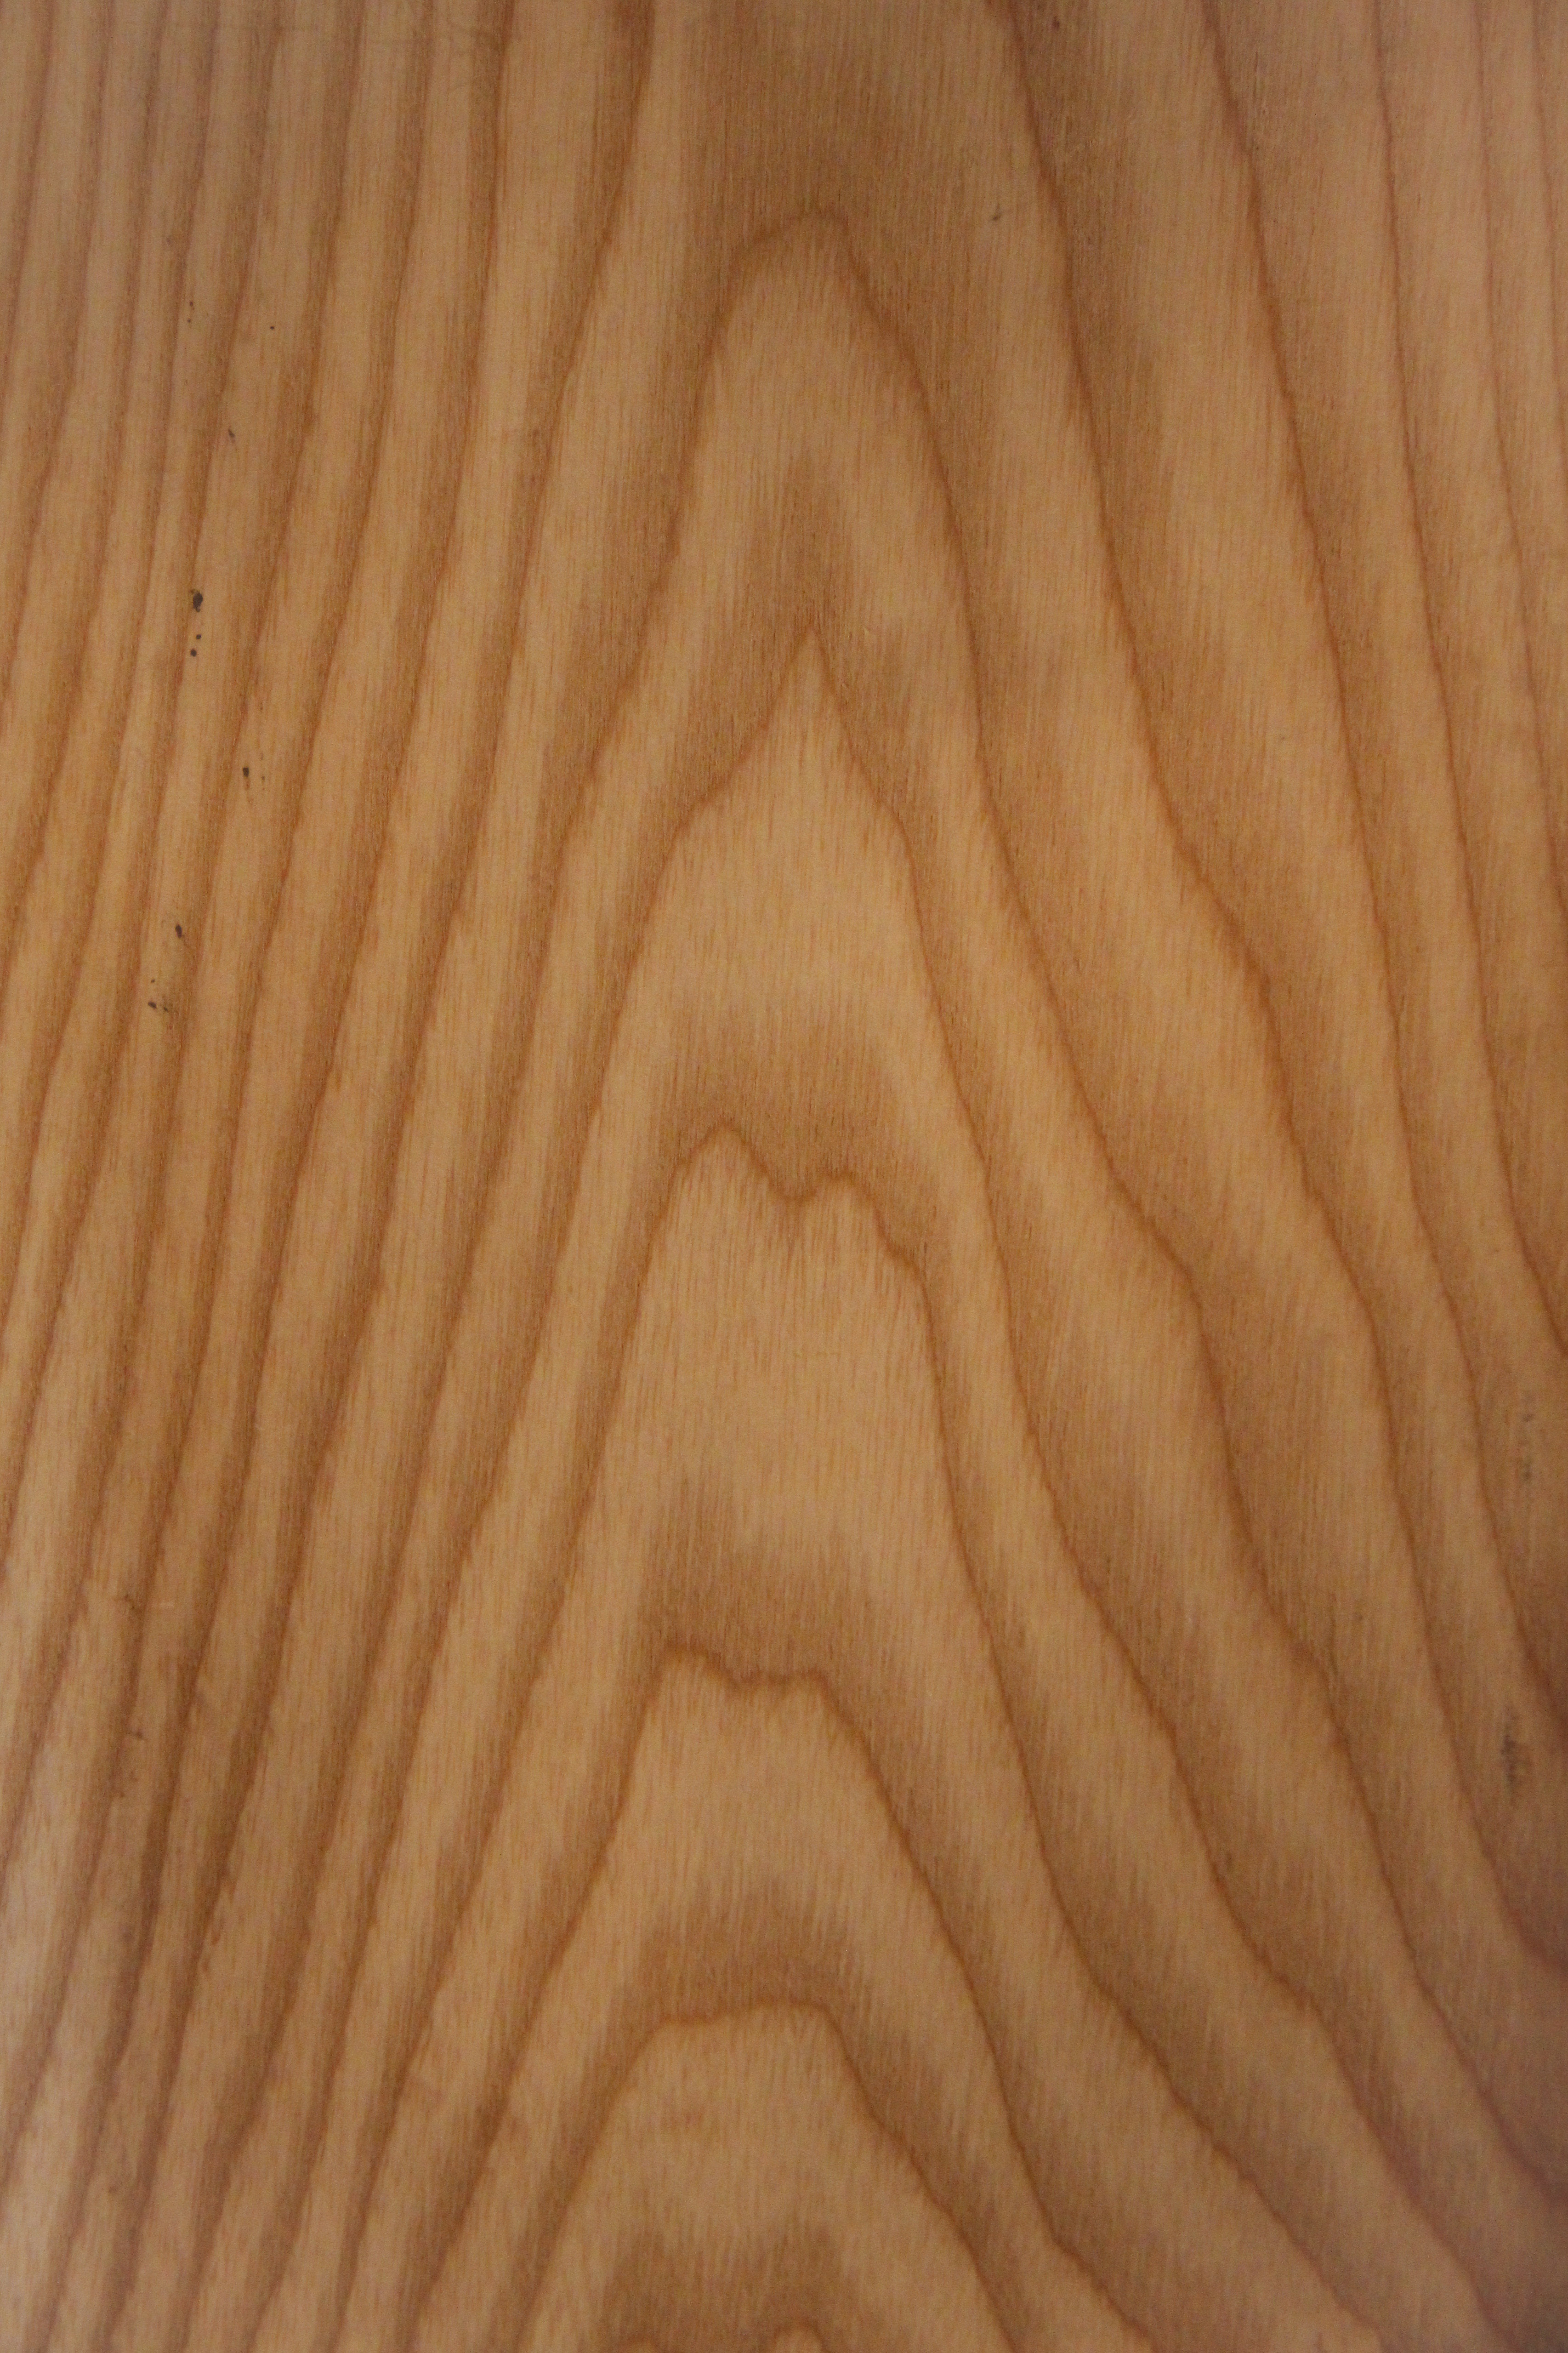 Wood Textures Archives - TextureX- Free and premium ...